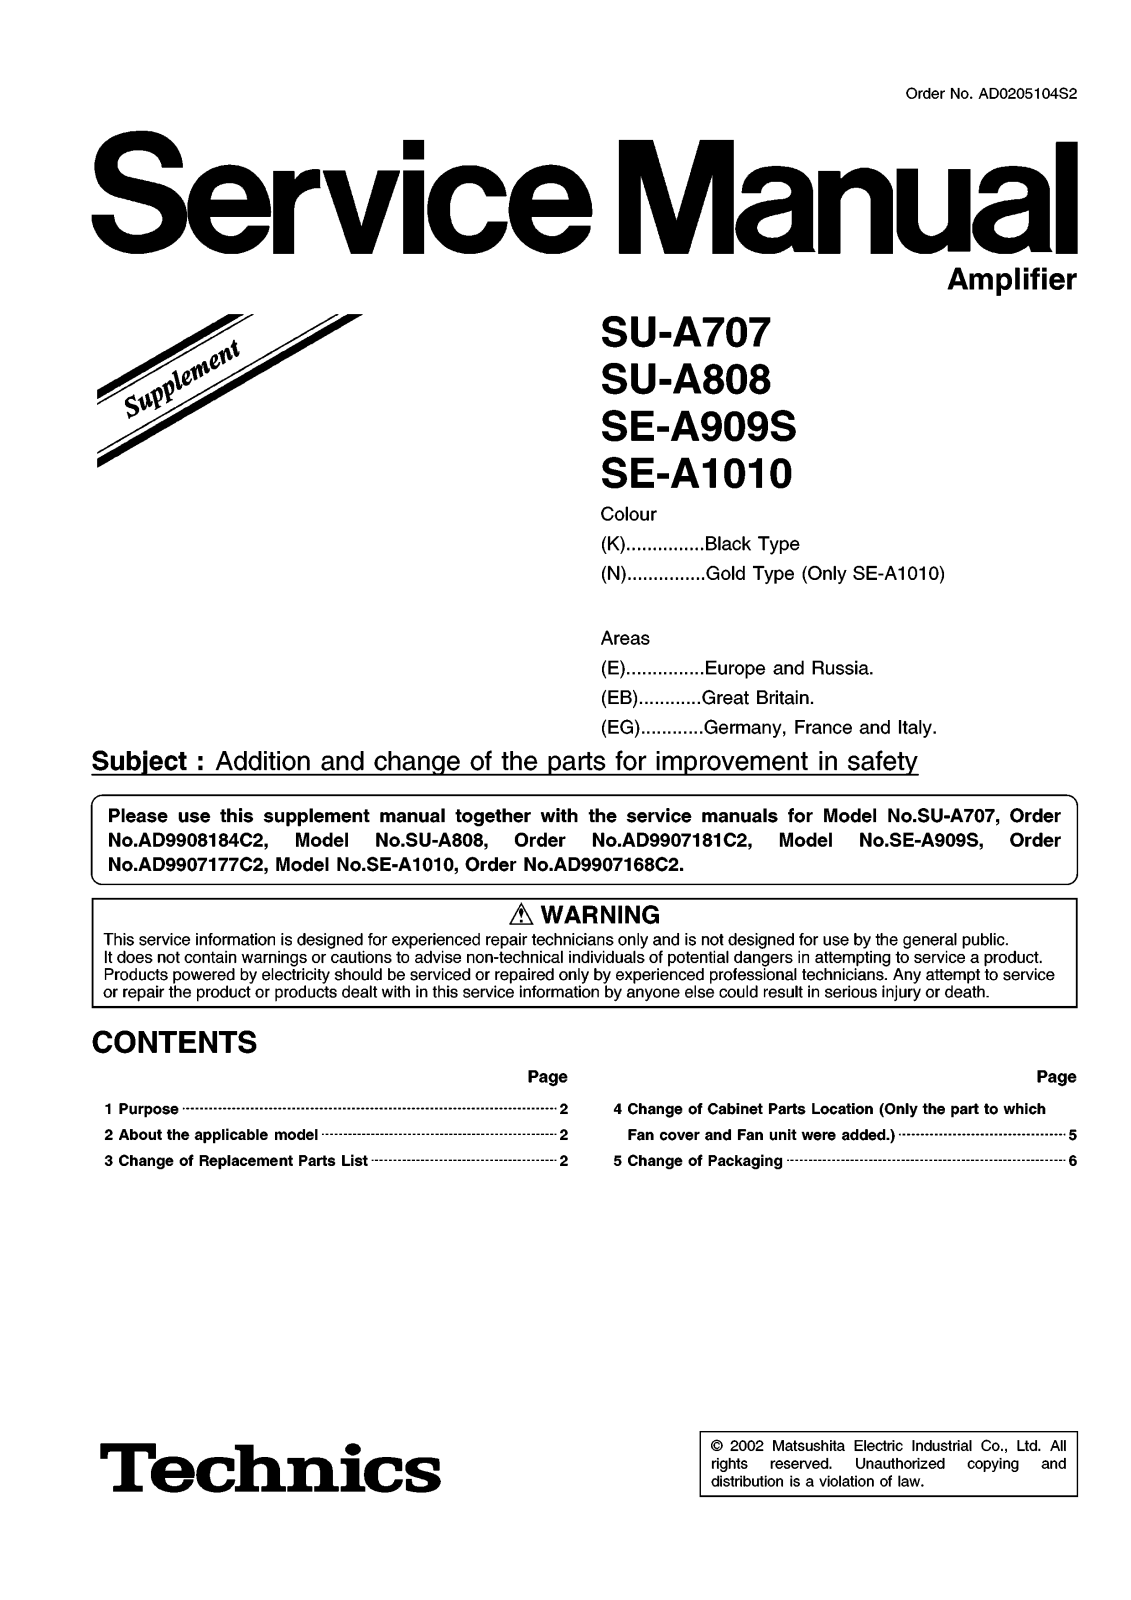 Technics SE-A1010-Supp Service Manual